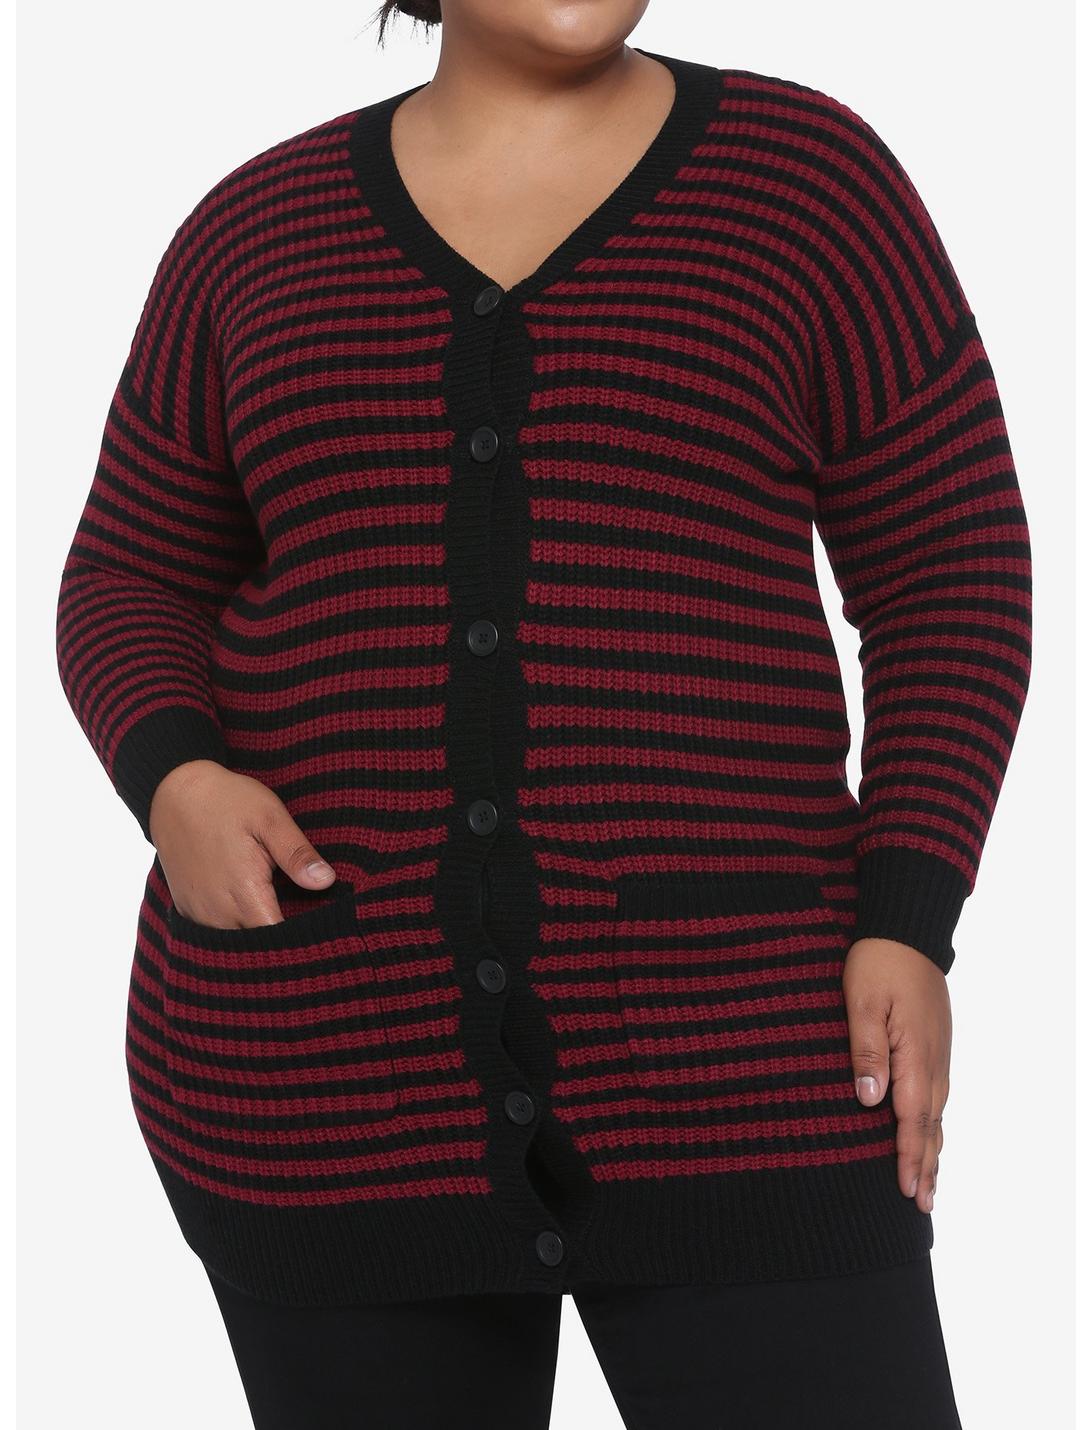 Black & Red Stripe Girls Cardigan Plus Size, STRIPES - RED, hi-res